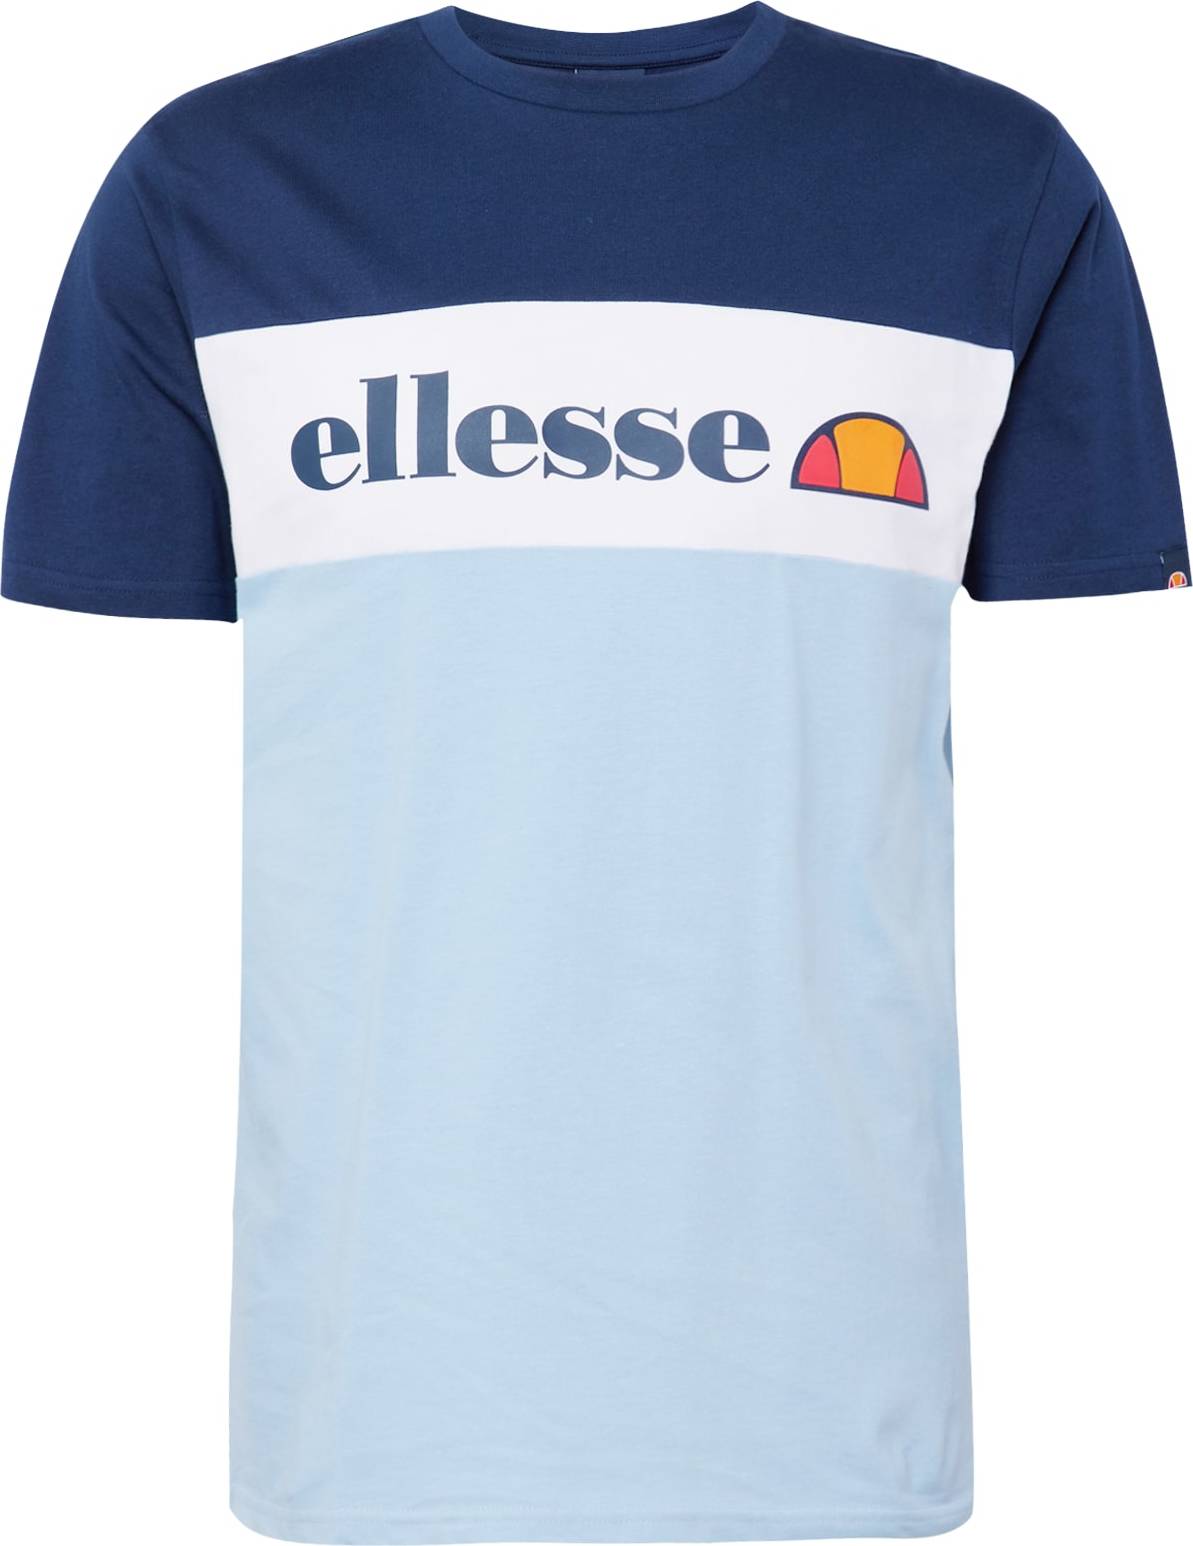 Tričko Ellesse námořnická modř / světlemodrá / žlutá / bílá